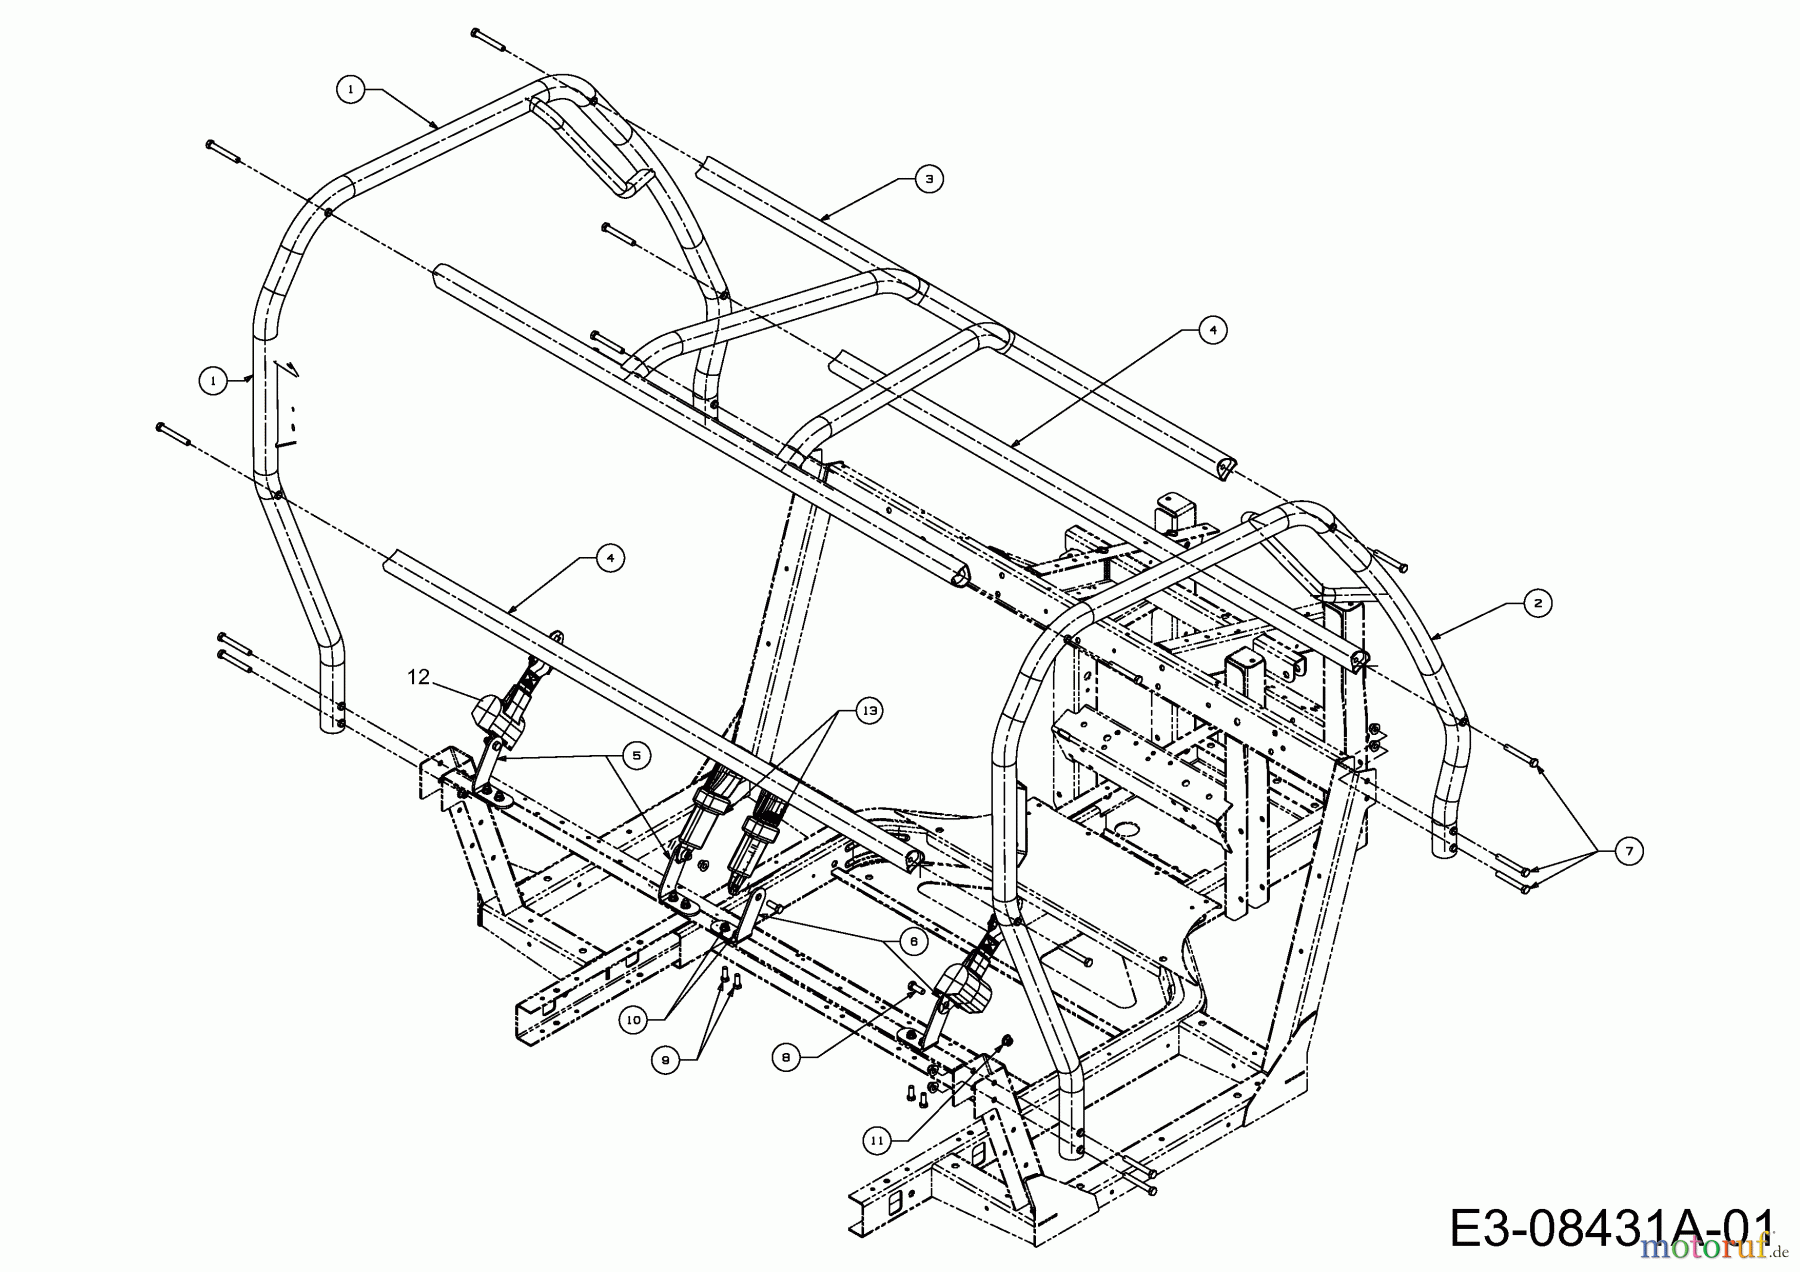  Massey Ferguson Utility Vehicle MF 20 MD 37AK468D695R  (2014) Seat belts, Rollbar